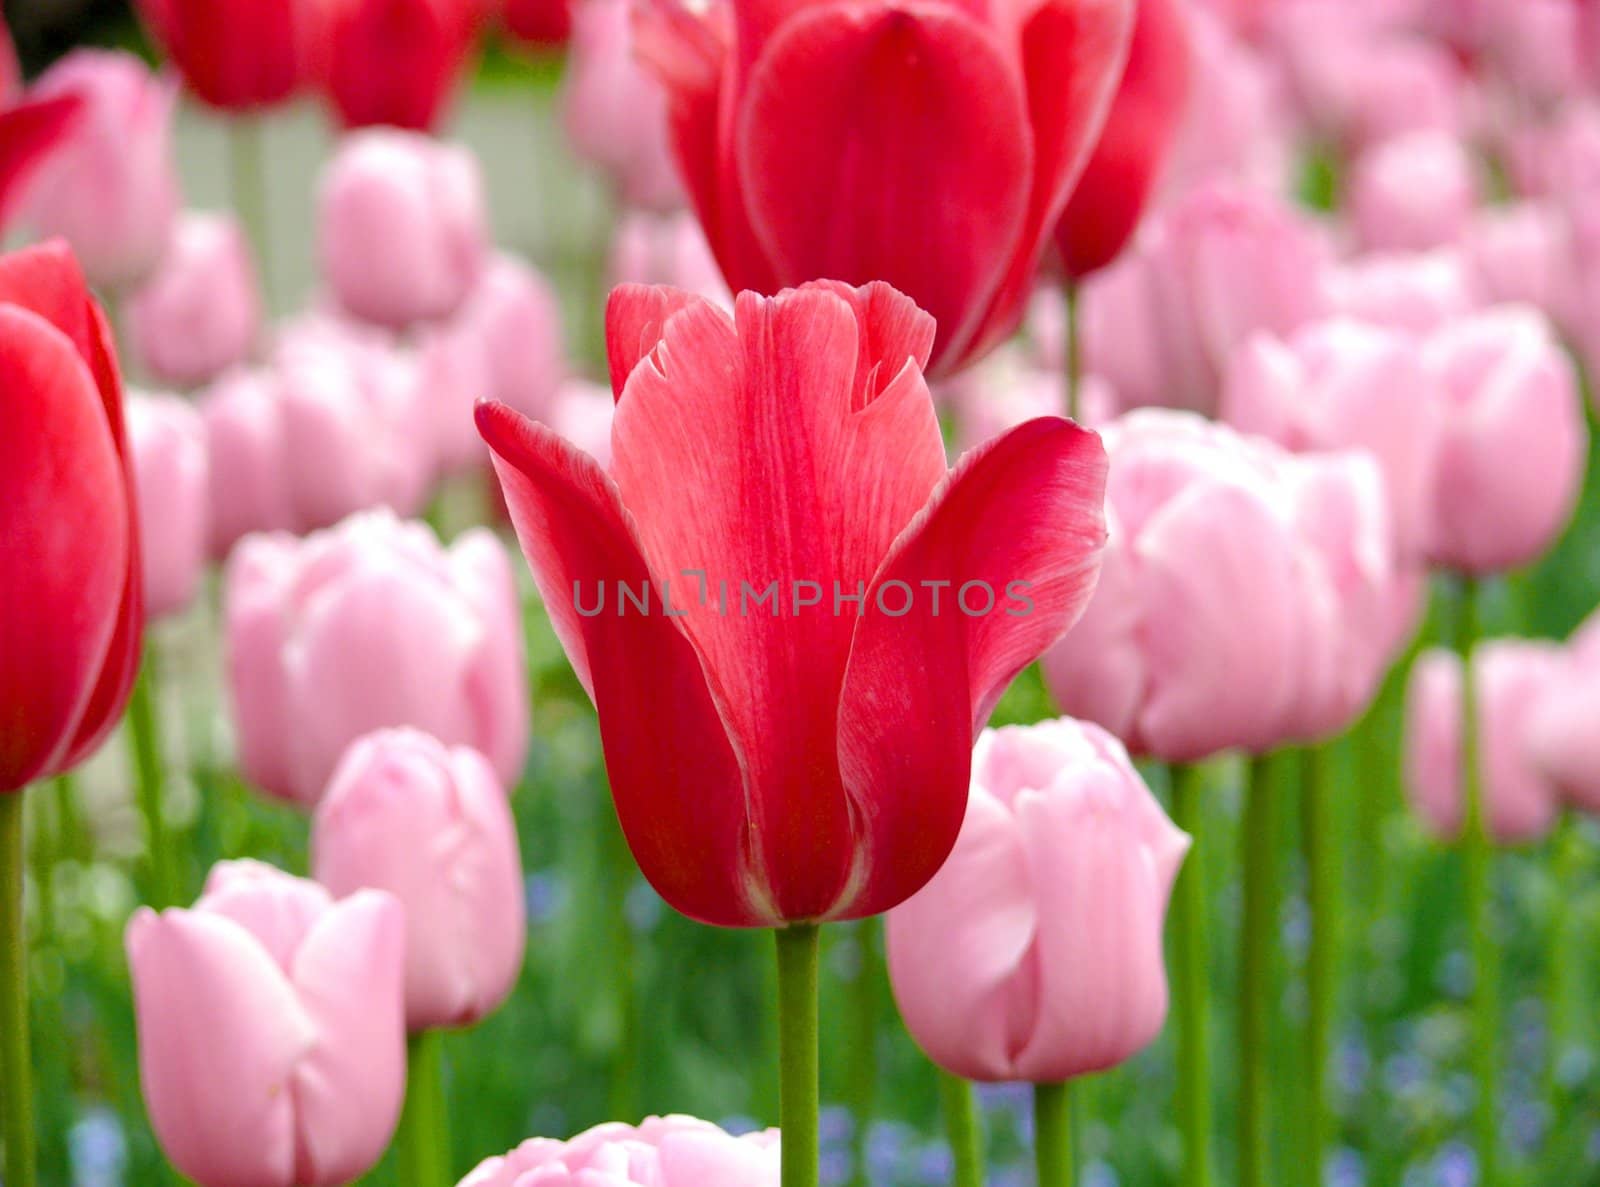 Many fresh bloom pink tulips in spring day by Stoyanov